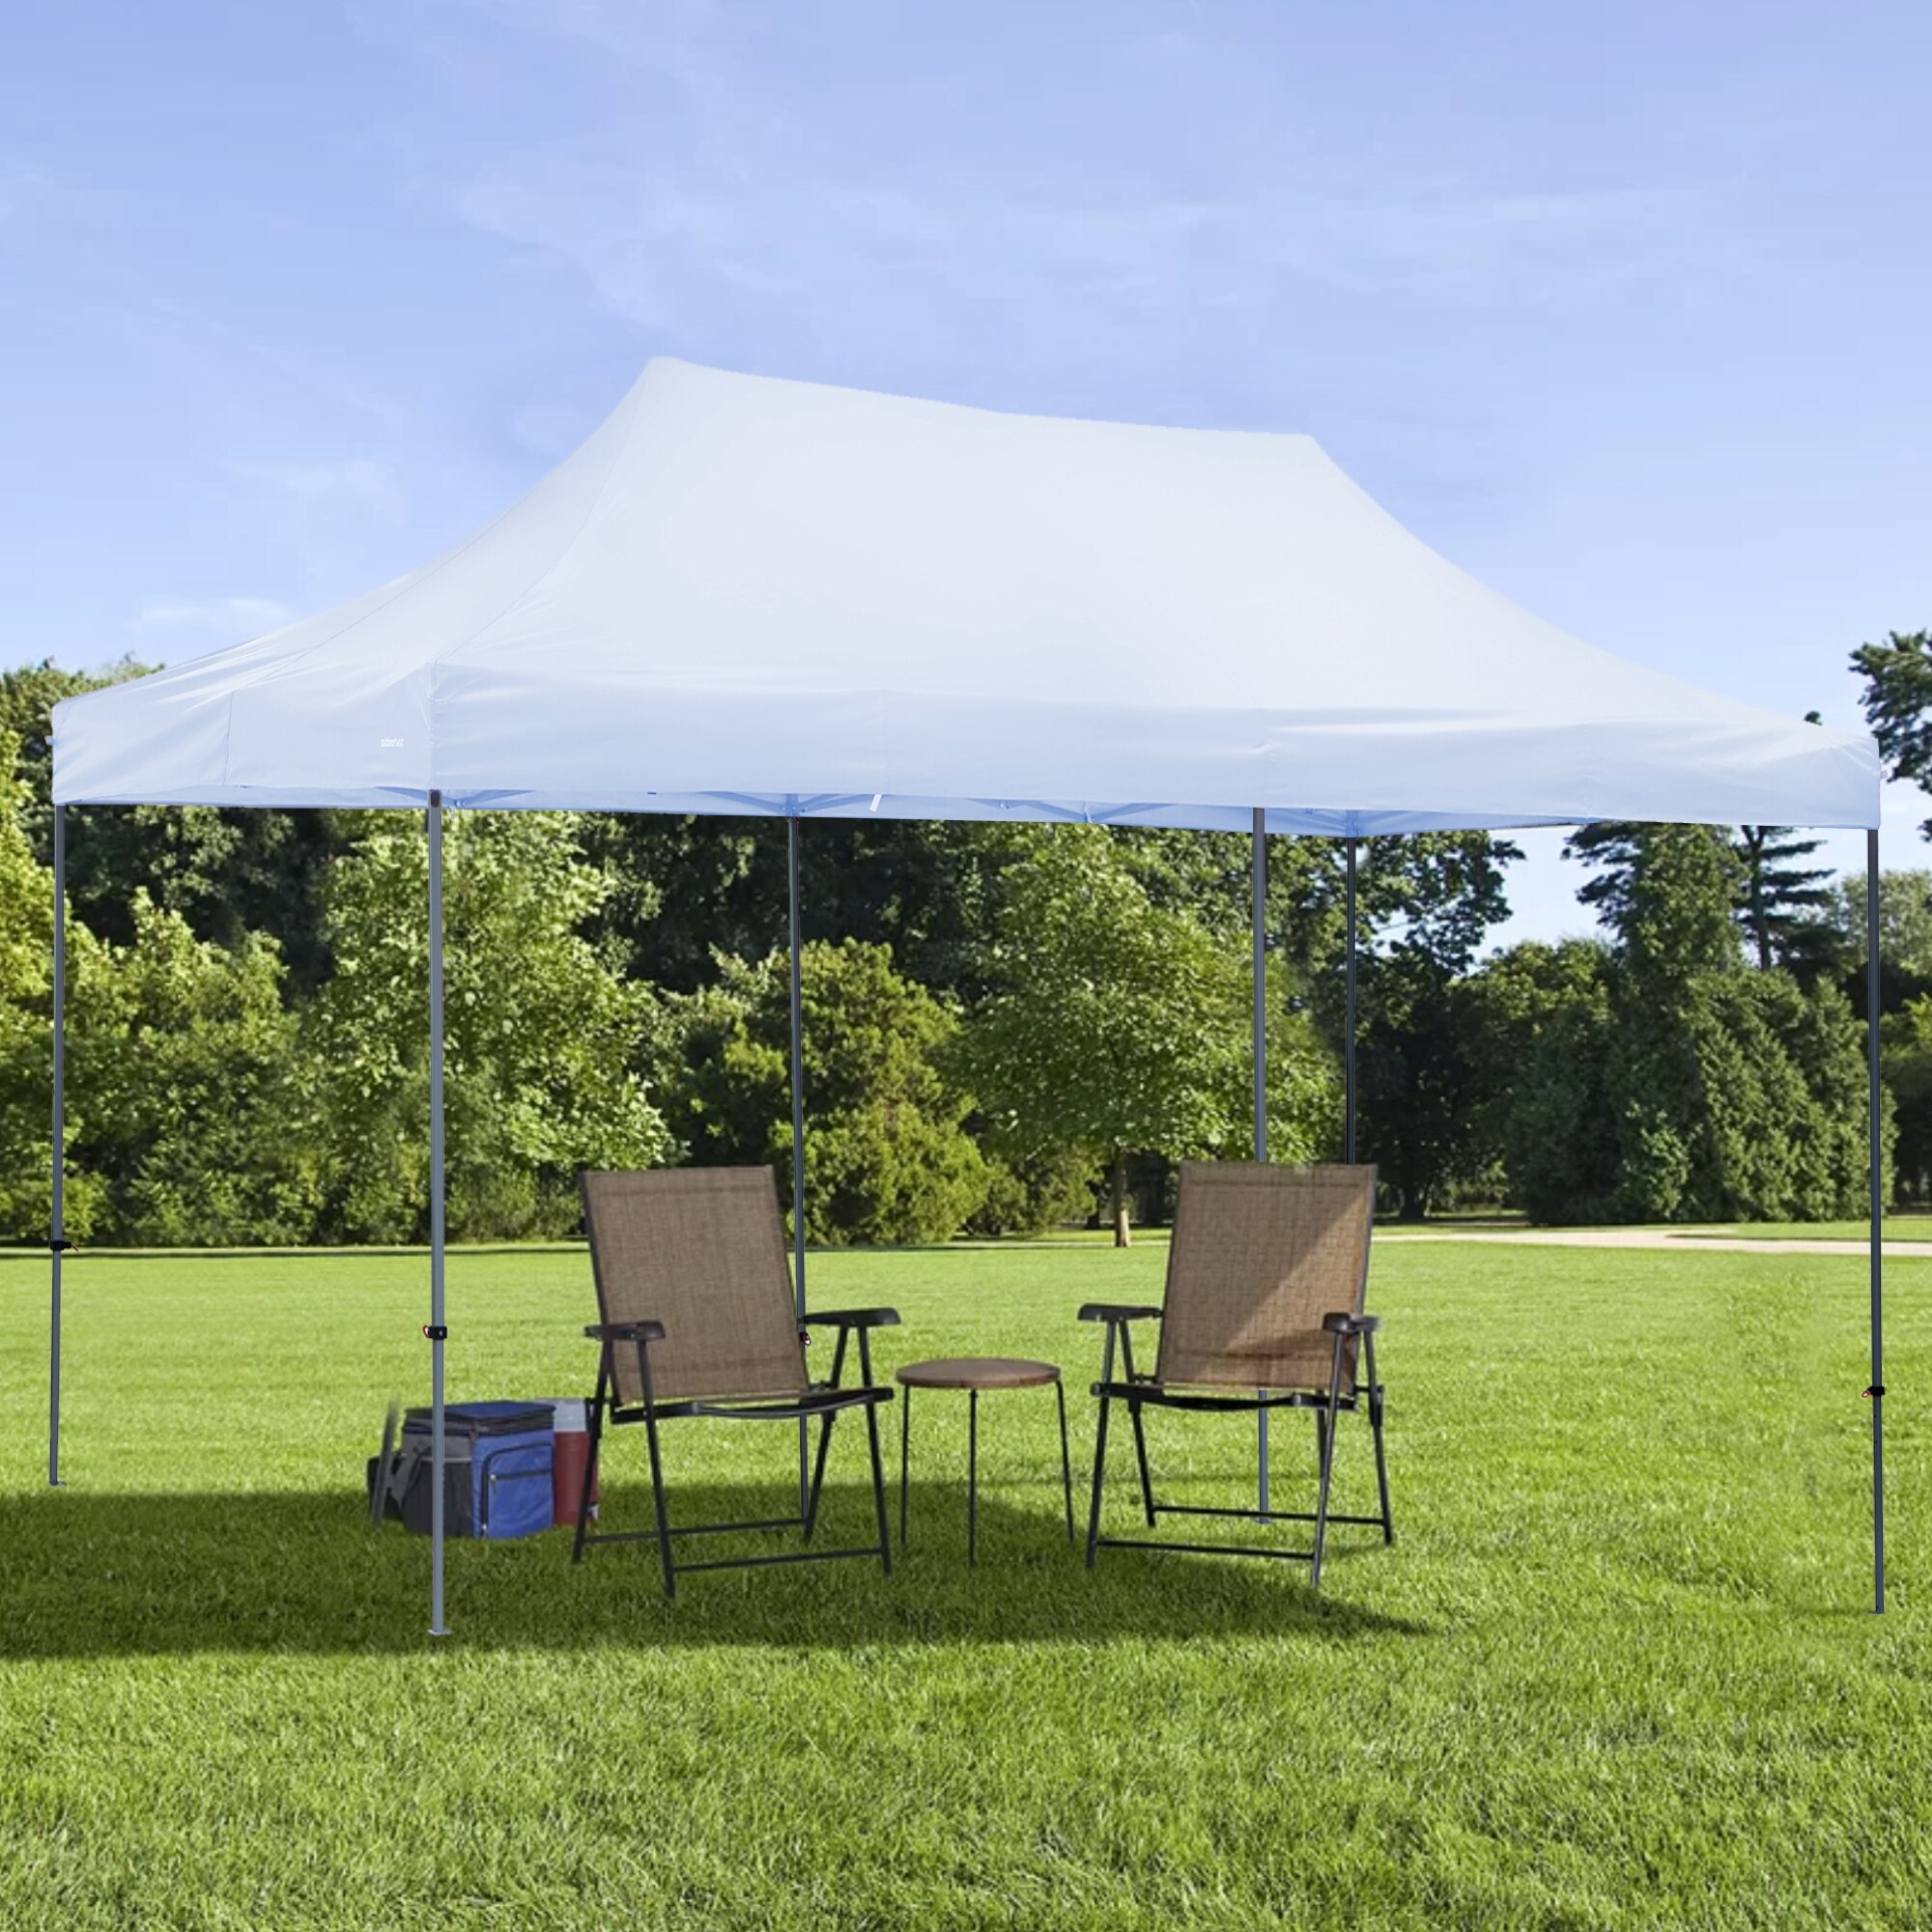 Ainfox 10' x 10' Pop up Canopy Tent, Folding Instant Outdoor Gazebo(Pink)